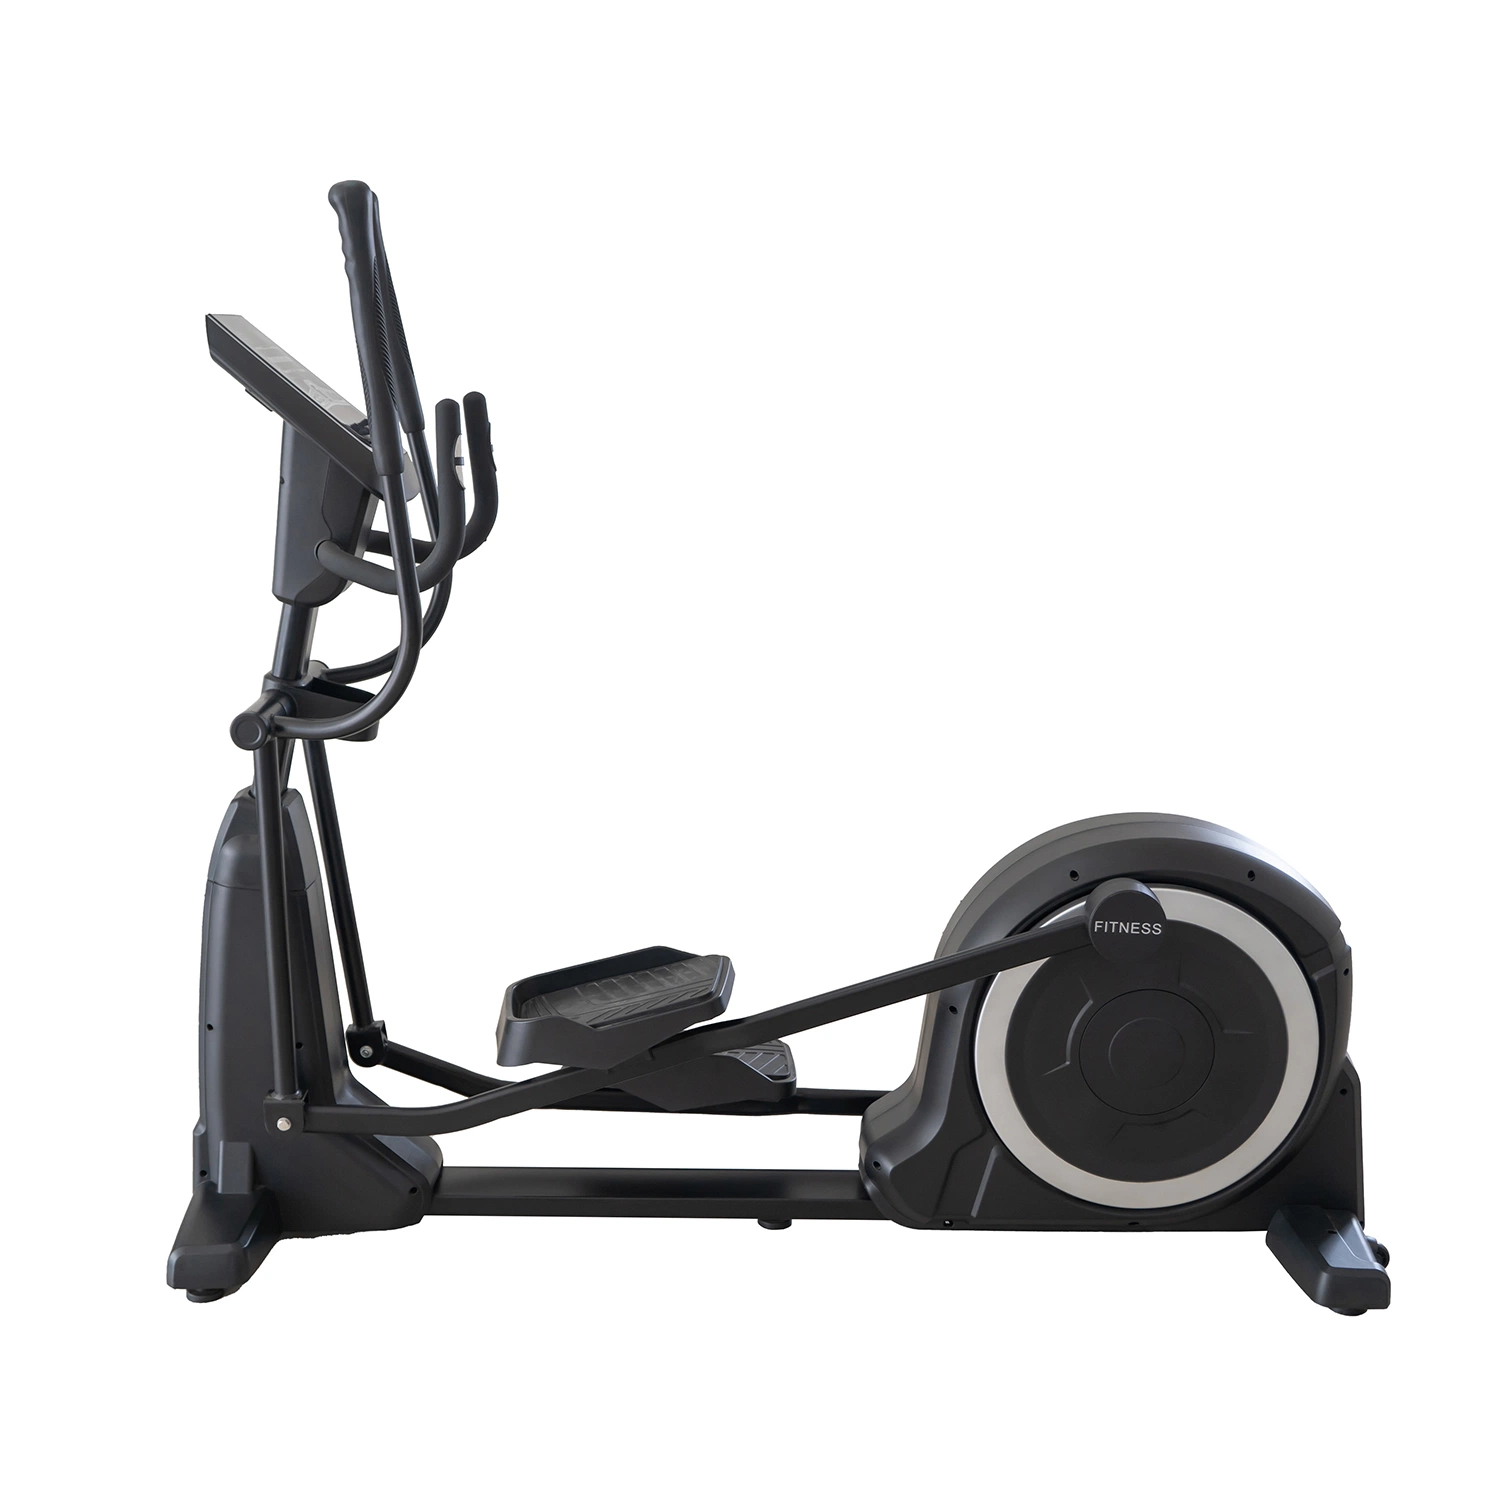 Xe-02 Fitness Gym Fitness Machine Cardio Equipment Elliptical/Cross Trainer/Elliptical Exercise Bike